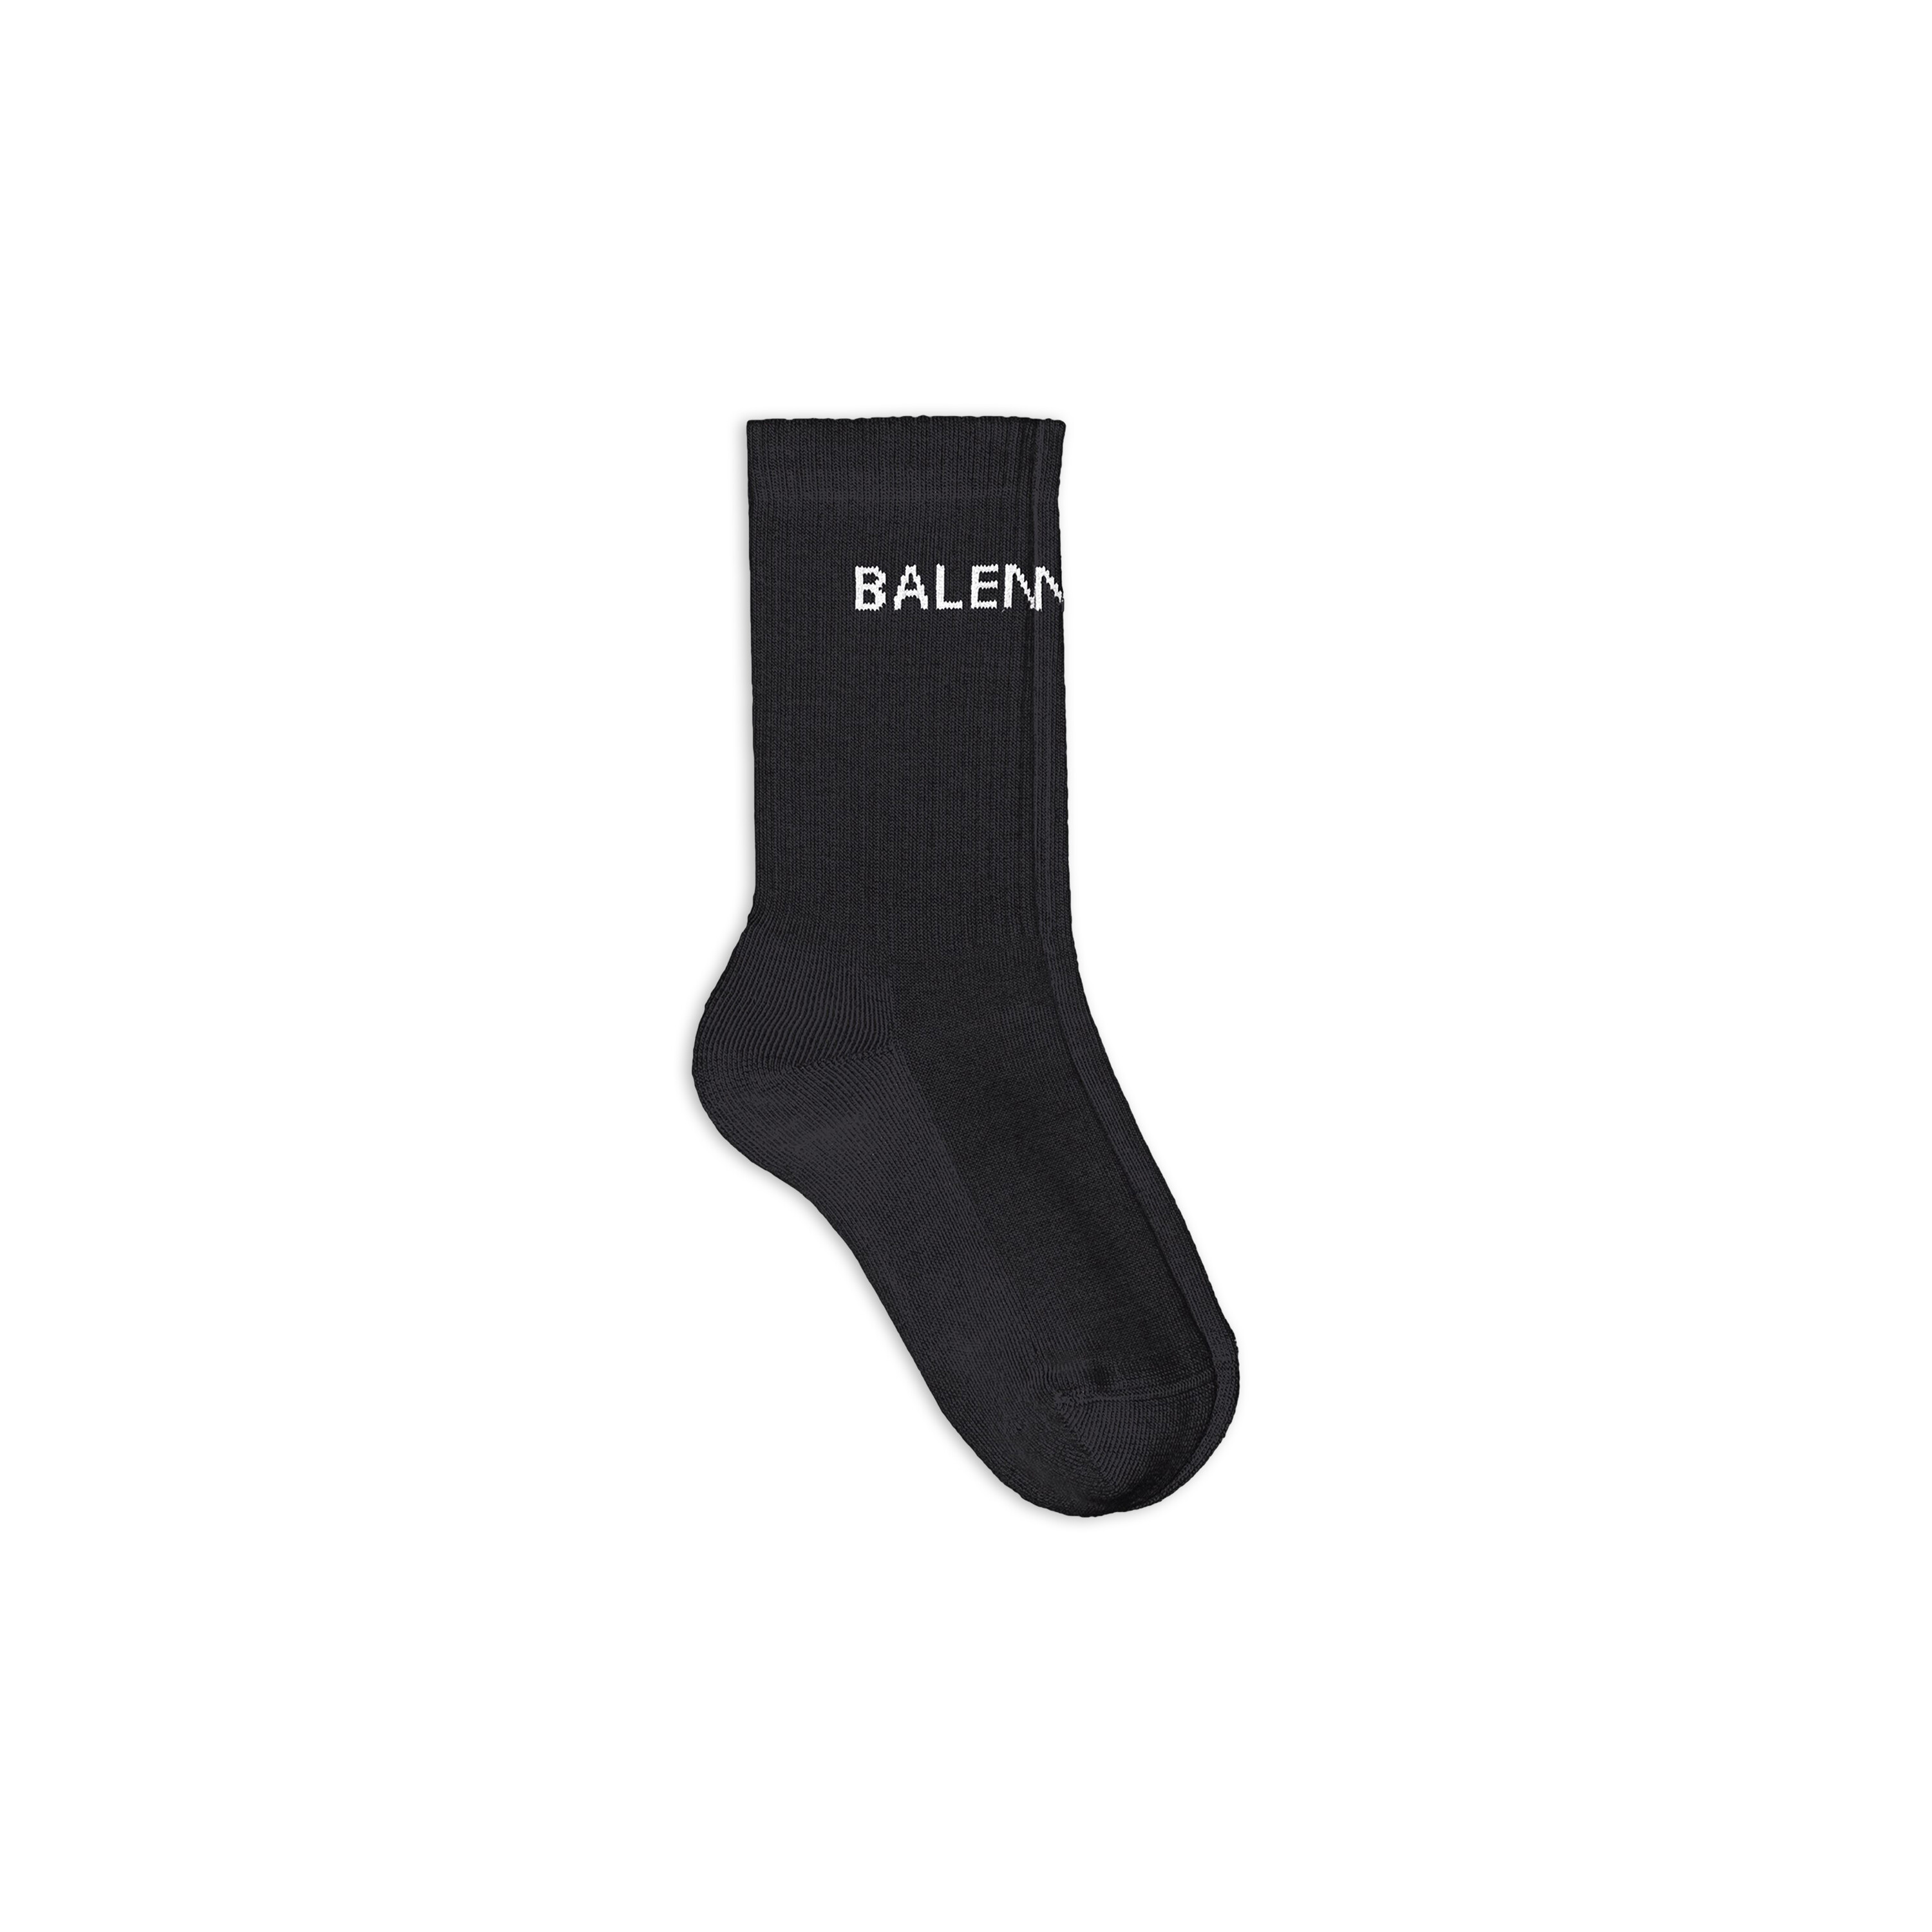 Women's Balenciaga Socks in Black/white |